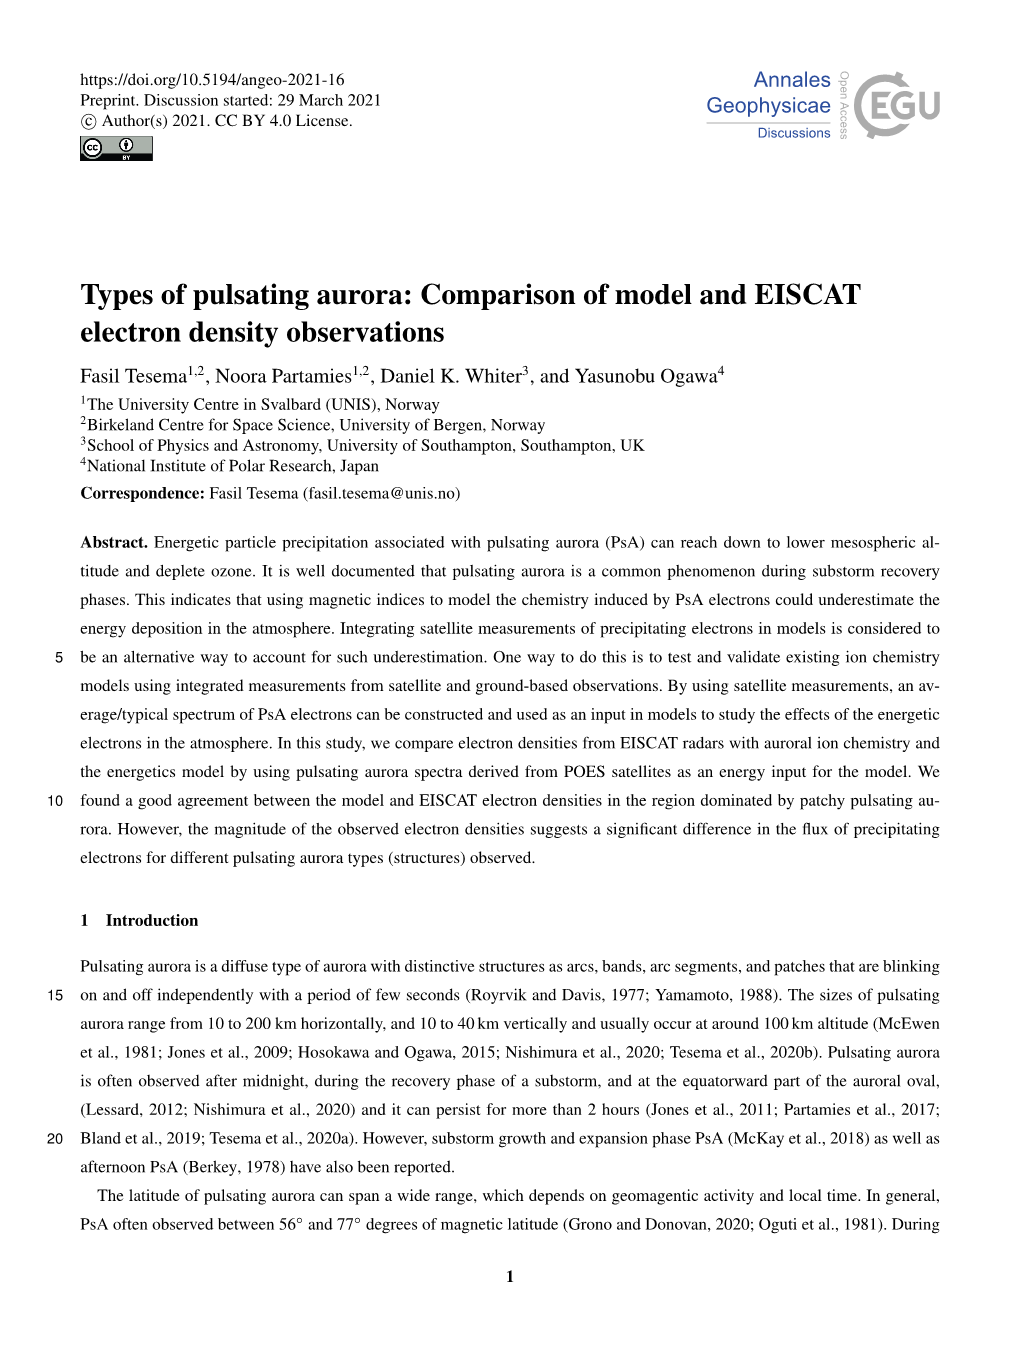 Types of Pulsating Aurora: Comparison of Model and EISCAT Electron Density Observations Fasil Tesema1,2, Noora Partamies1,2, Daniel K